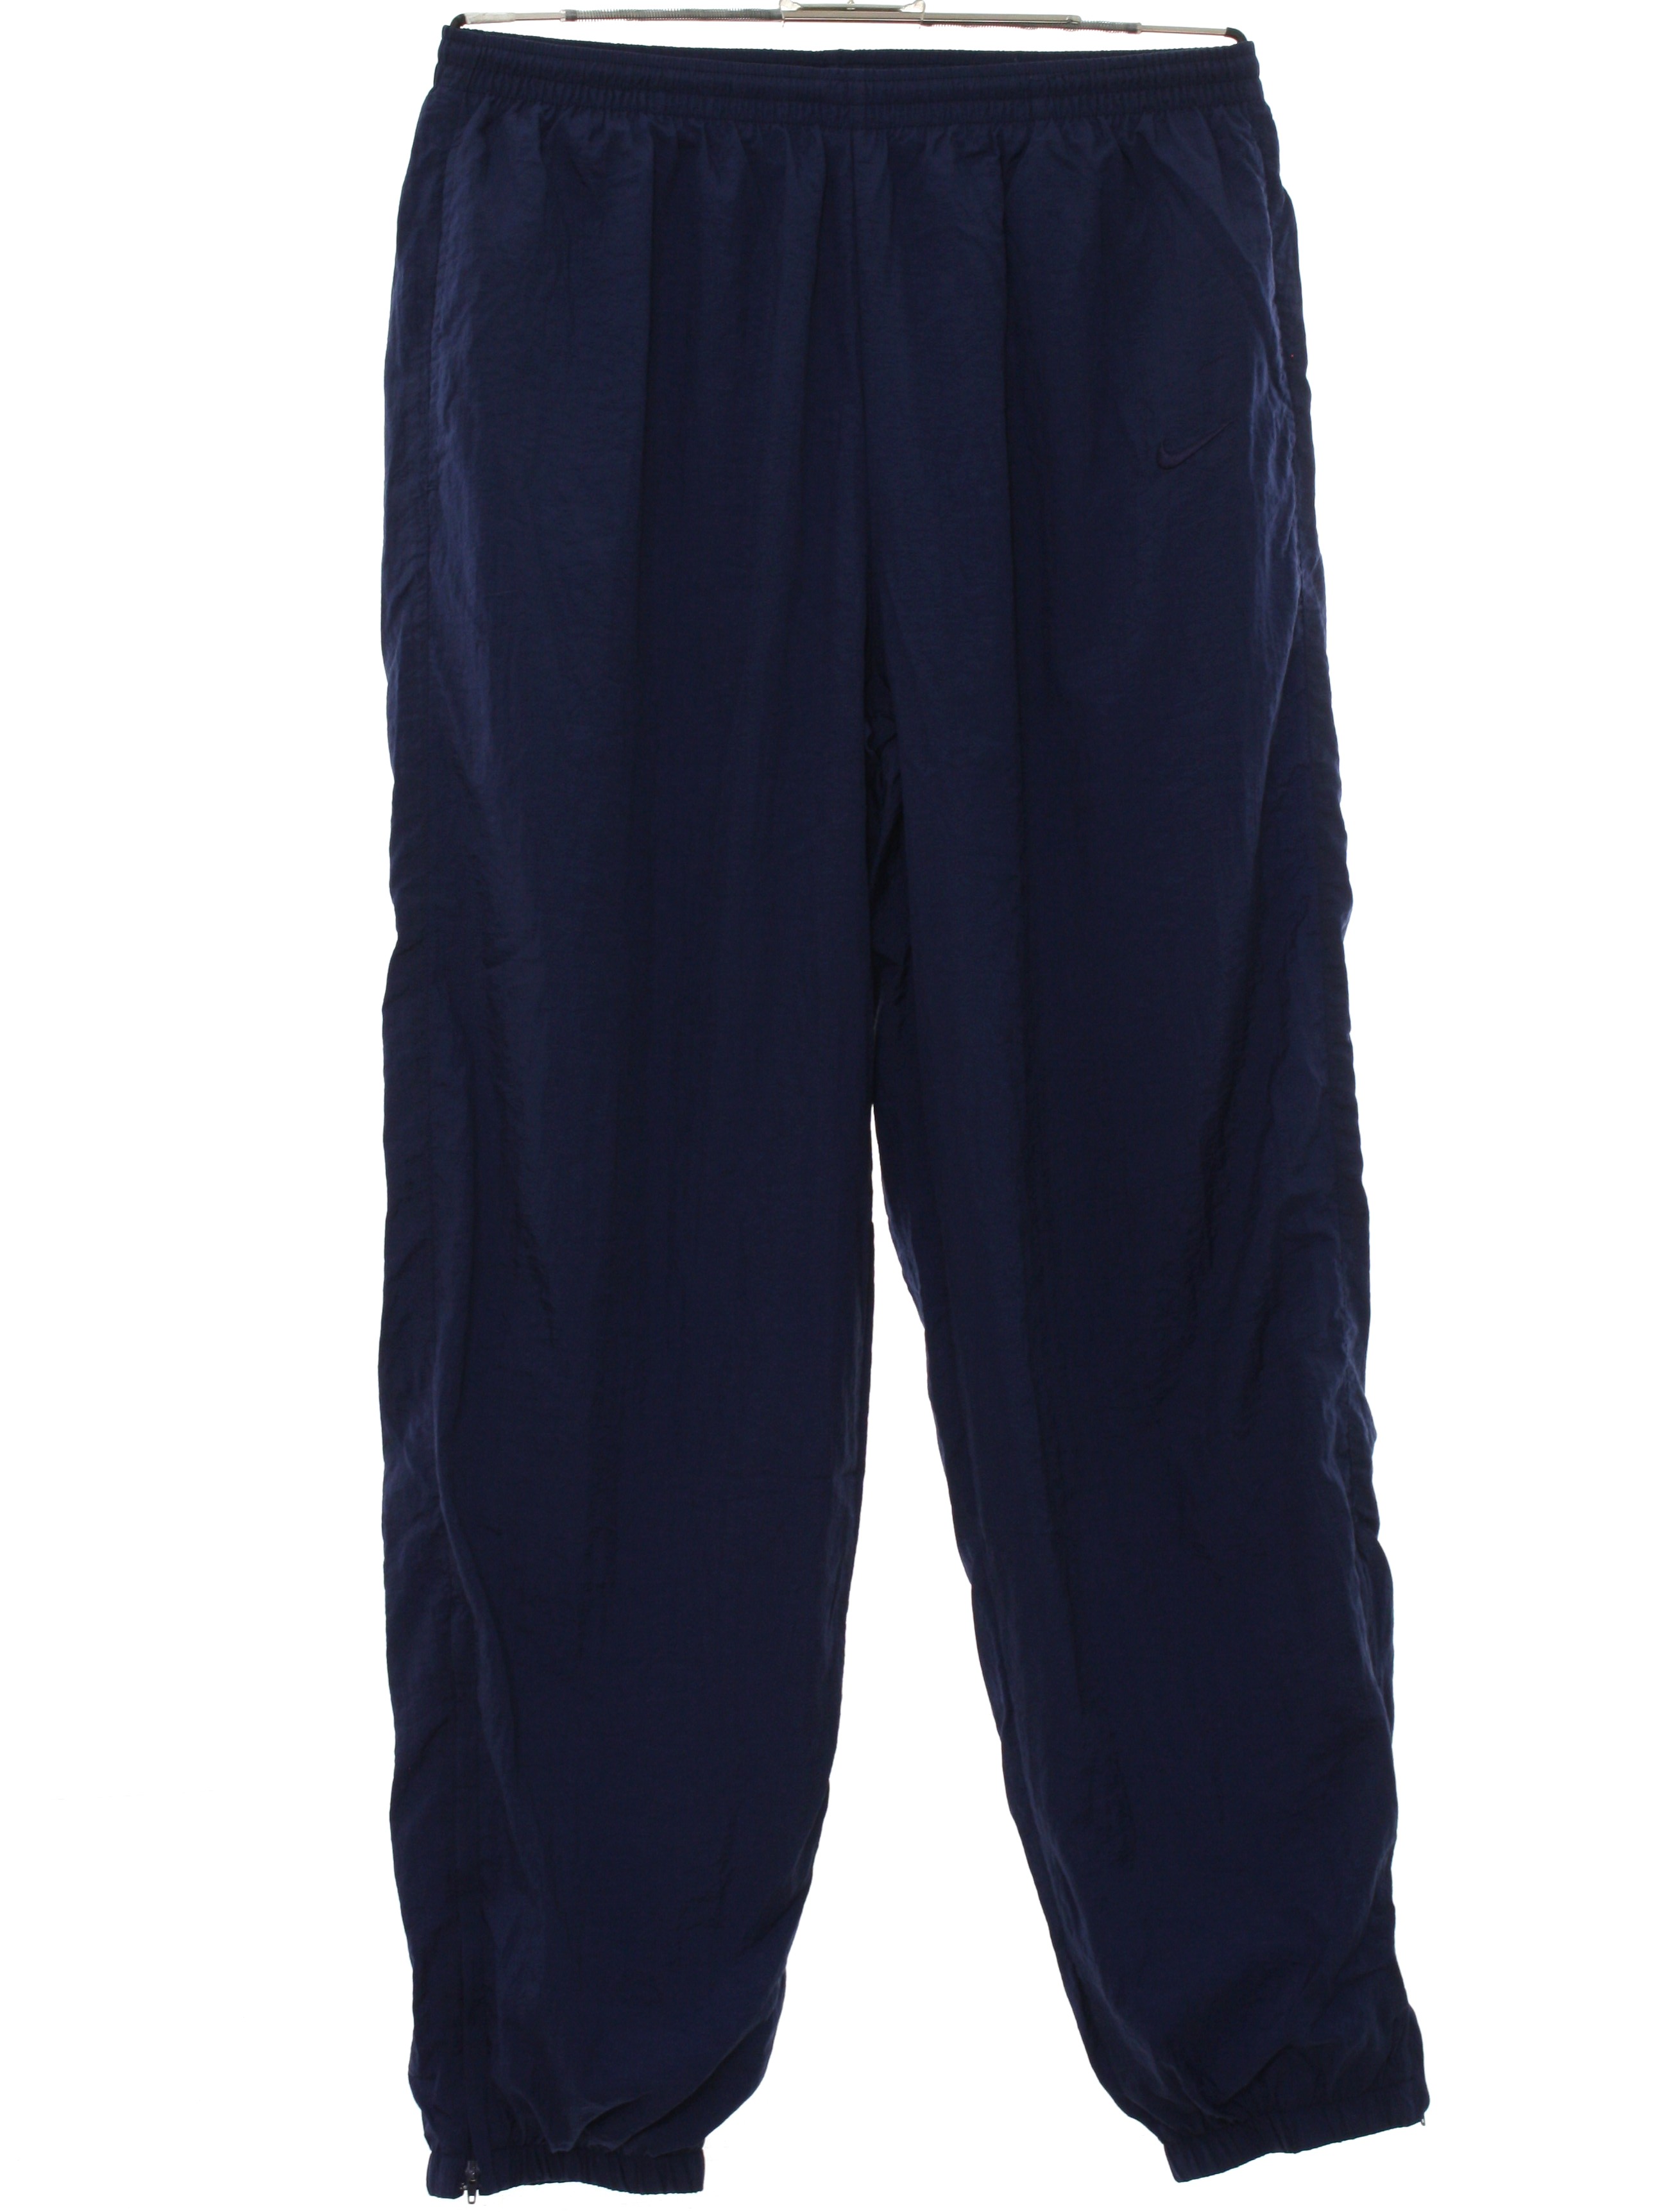 1990s Nike Pants: 90s -Nike- Mens navy blue background nylon shell wide ...